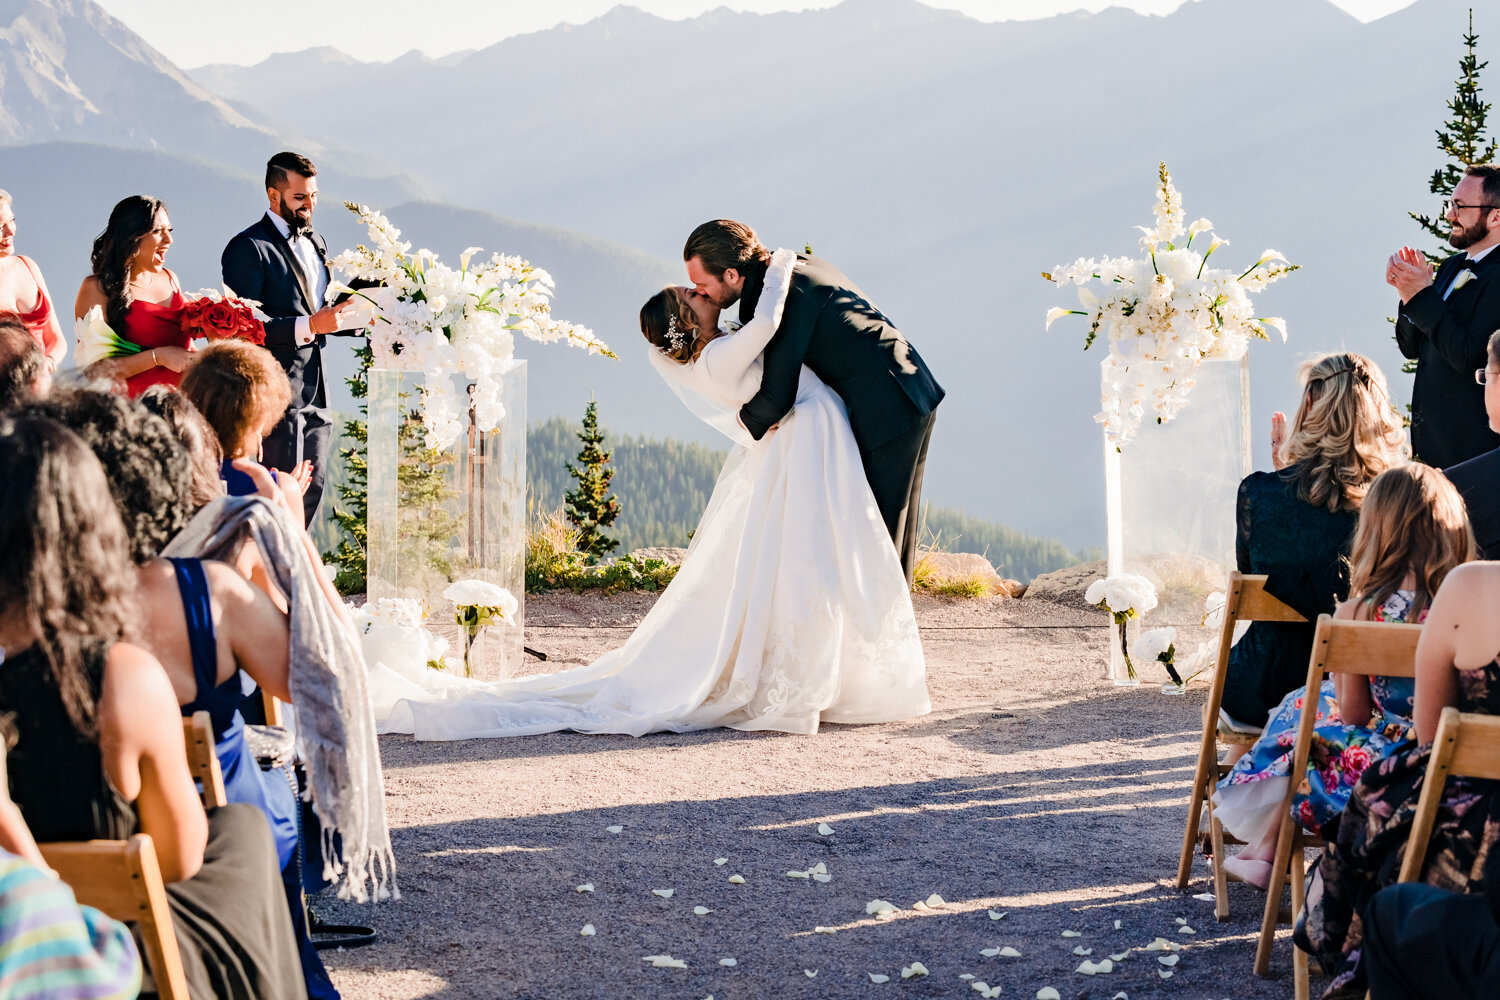  Little Nell summer wedding by Aspen photographer, JMGant Photography. 